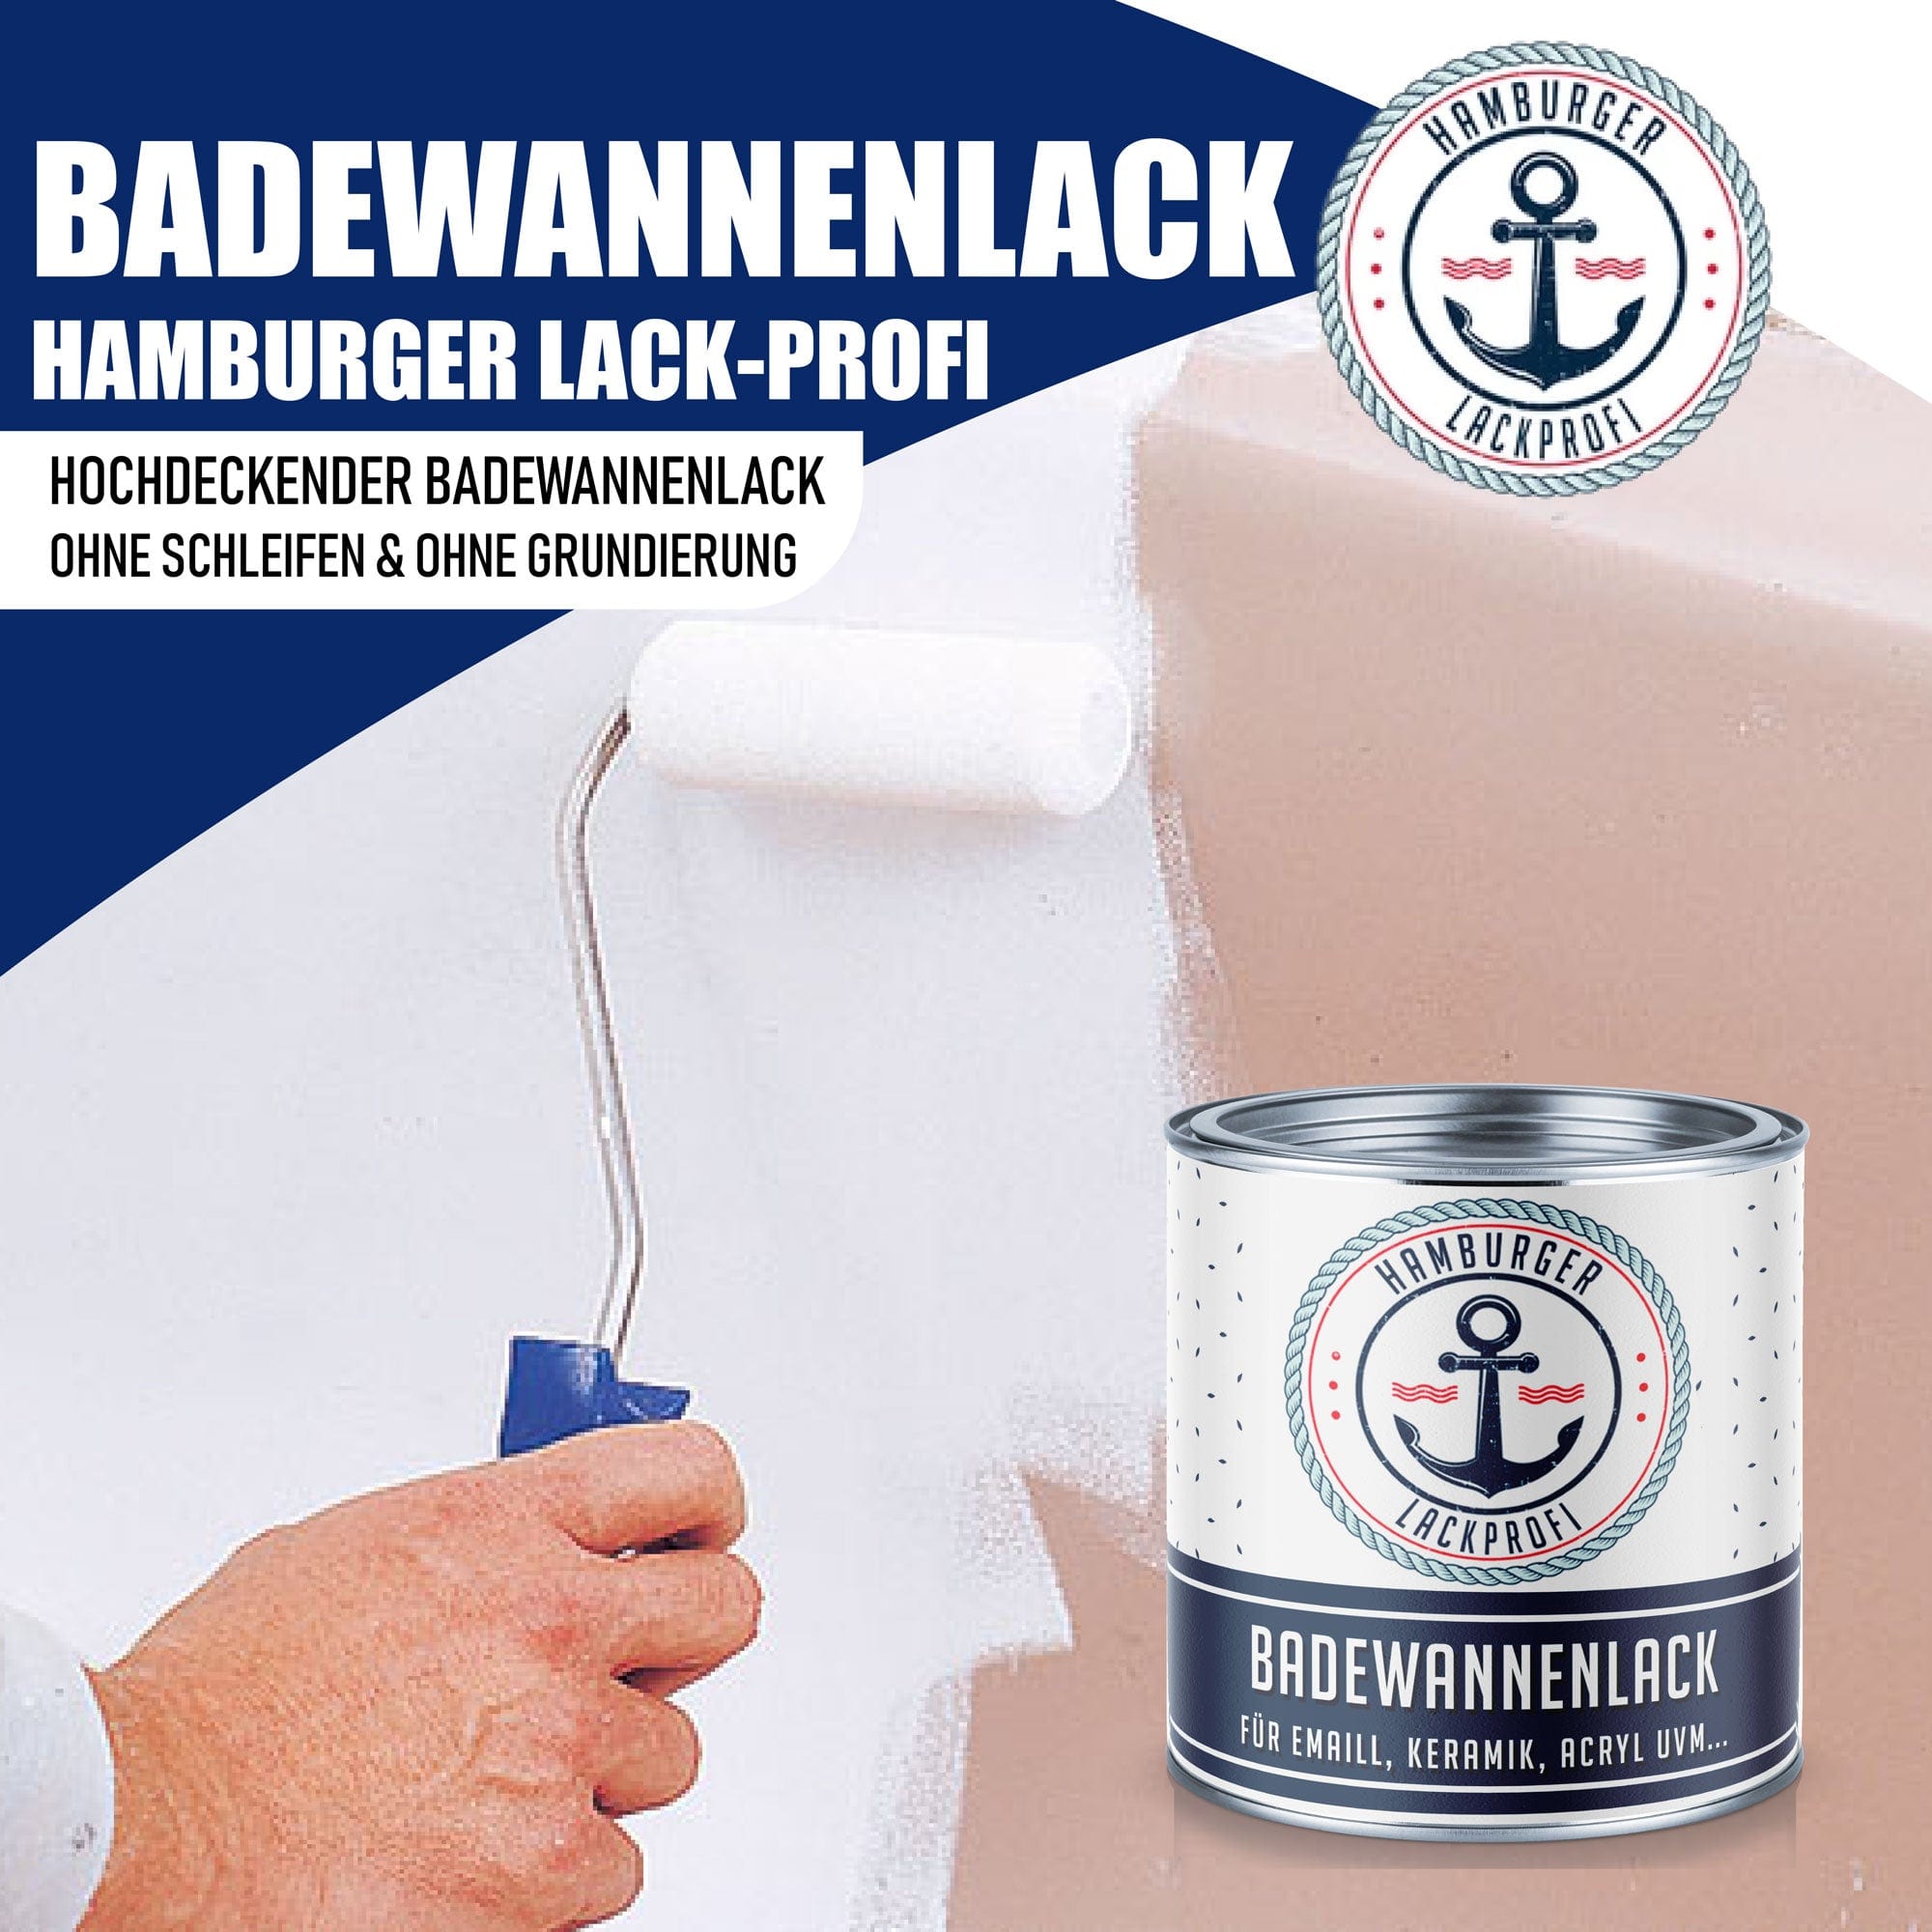 Hamburger Lack-Profi Badewannenlack Hamburger Lack-Profi 2K Badewannenlack Safrangelb RAL 1017 - Glänzend / Seidenmatt / Matt